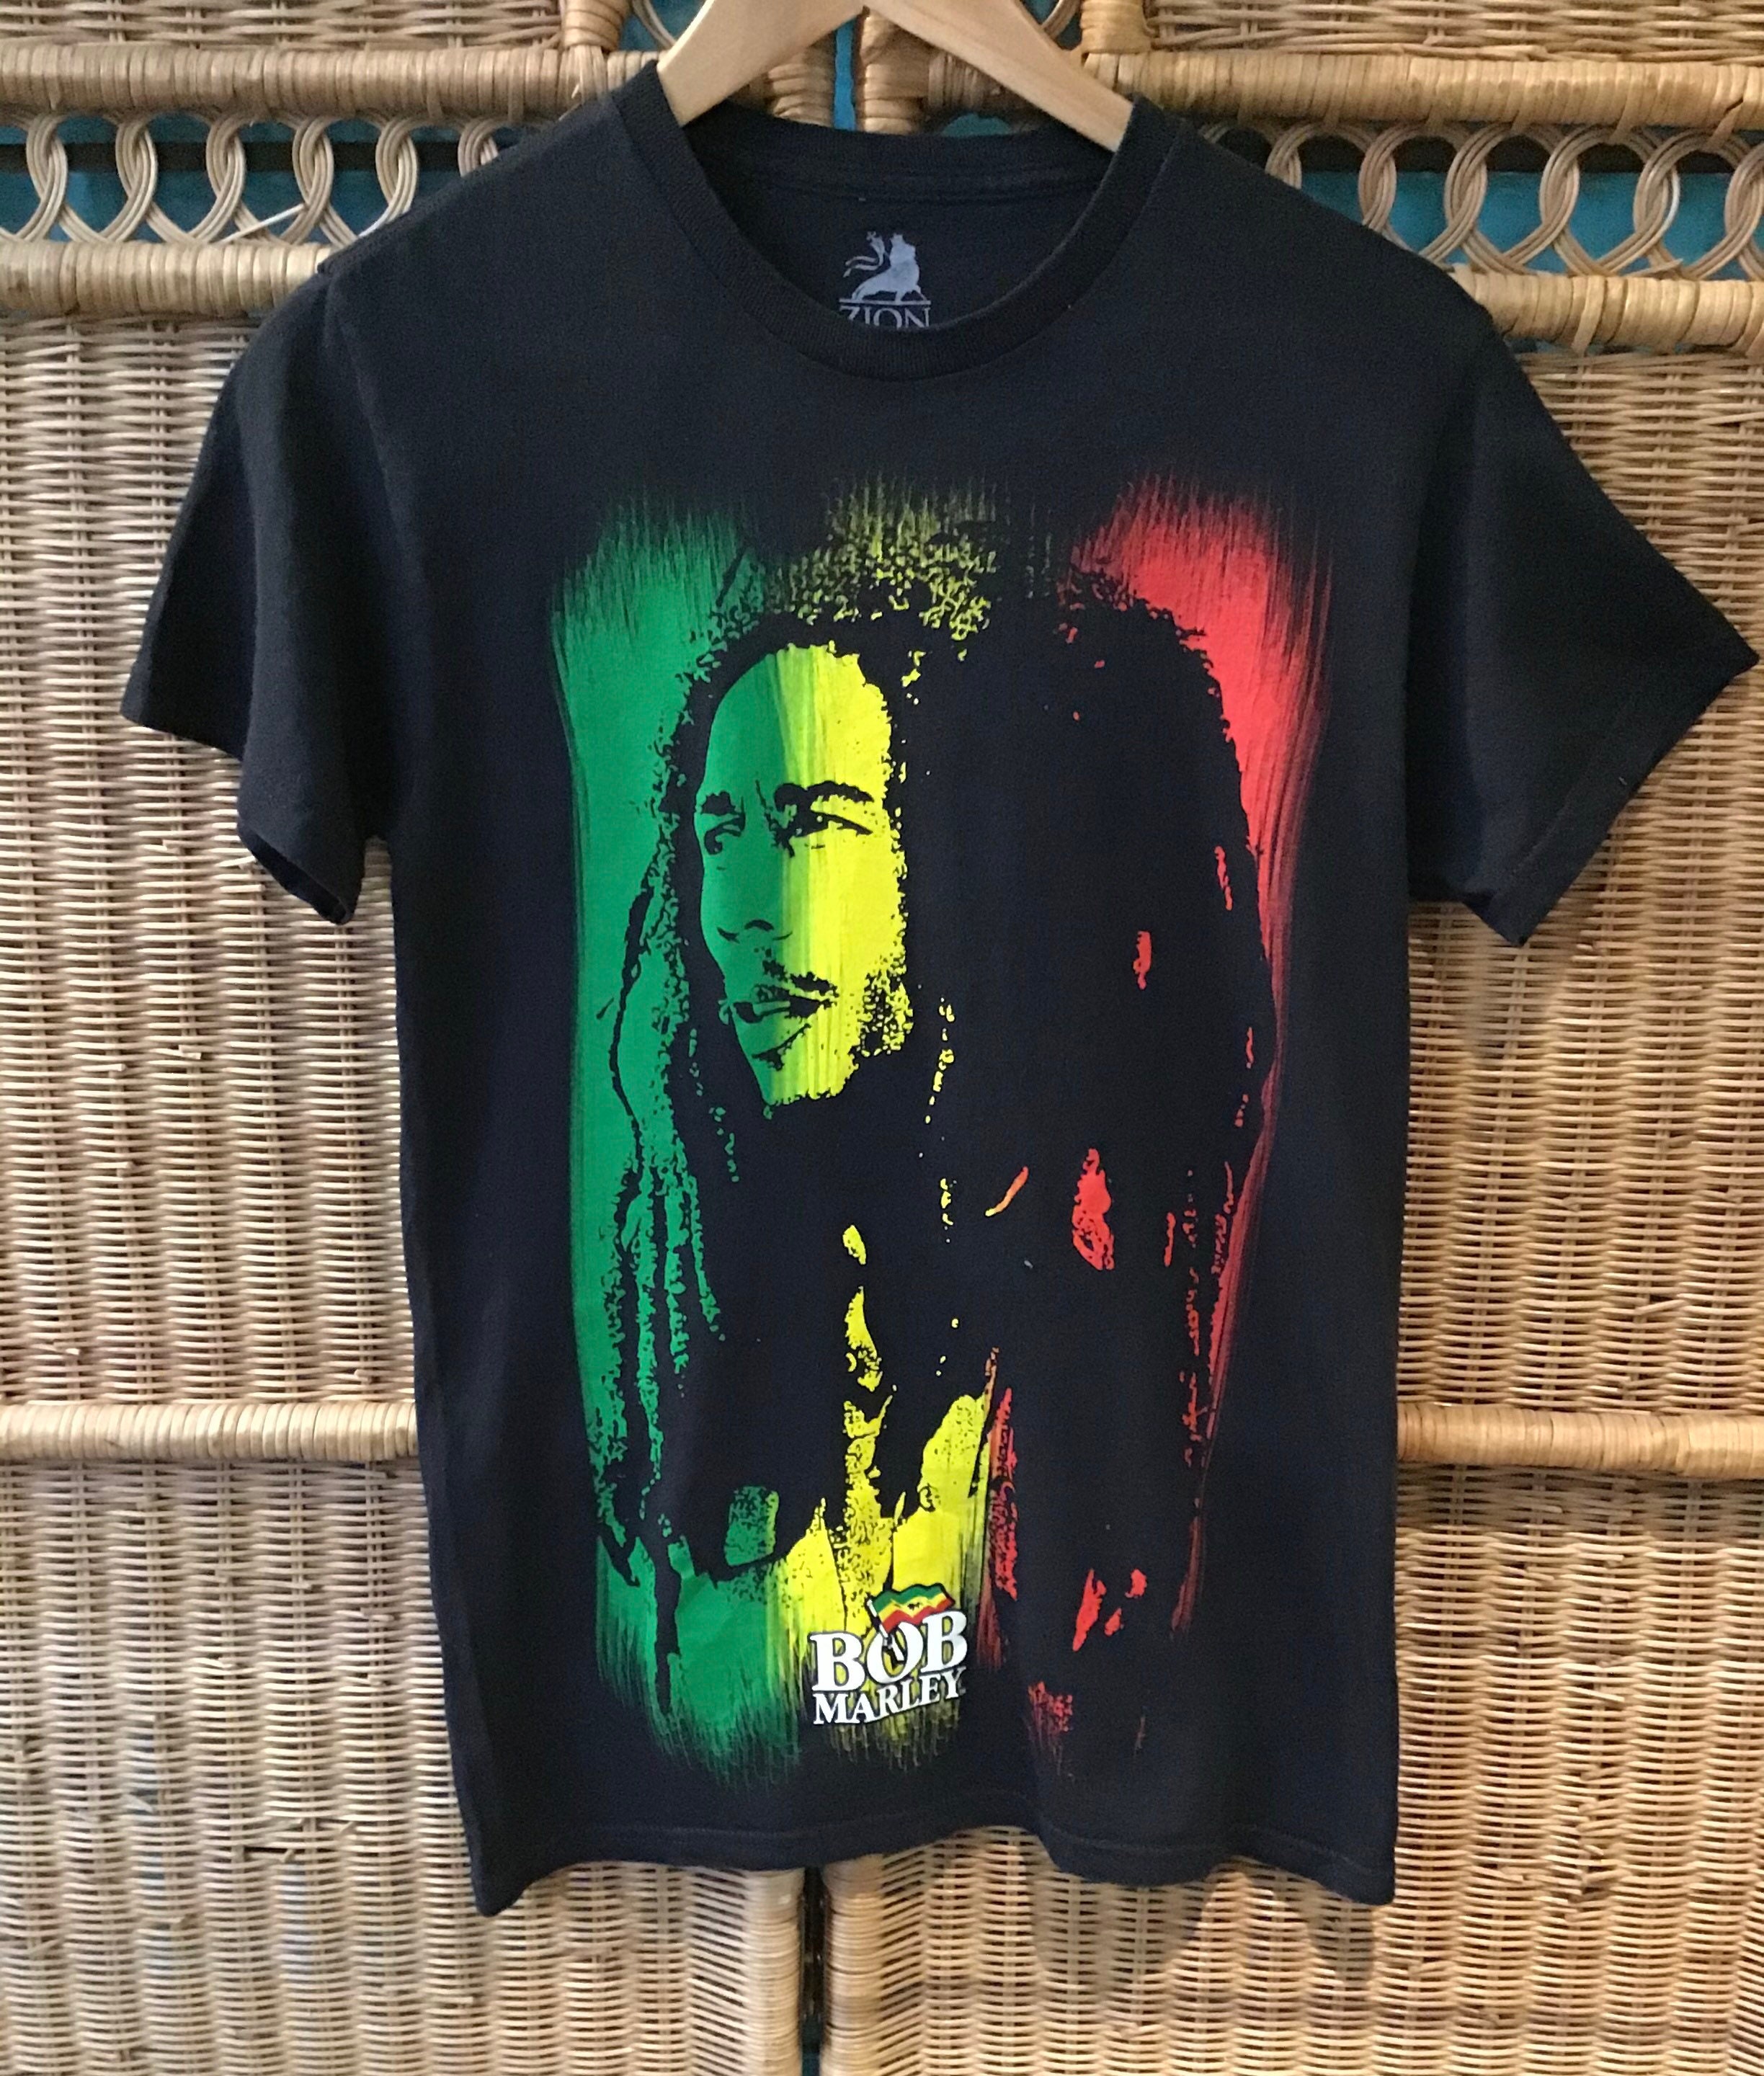 Buy Bob Marley Tshirt in India - Etsy